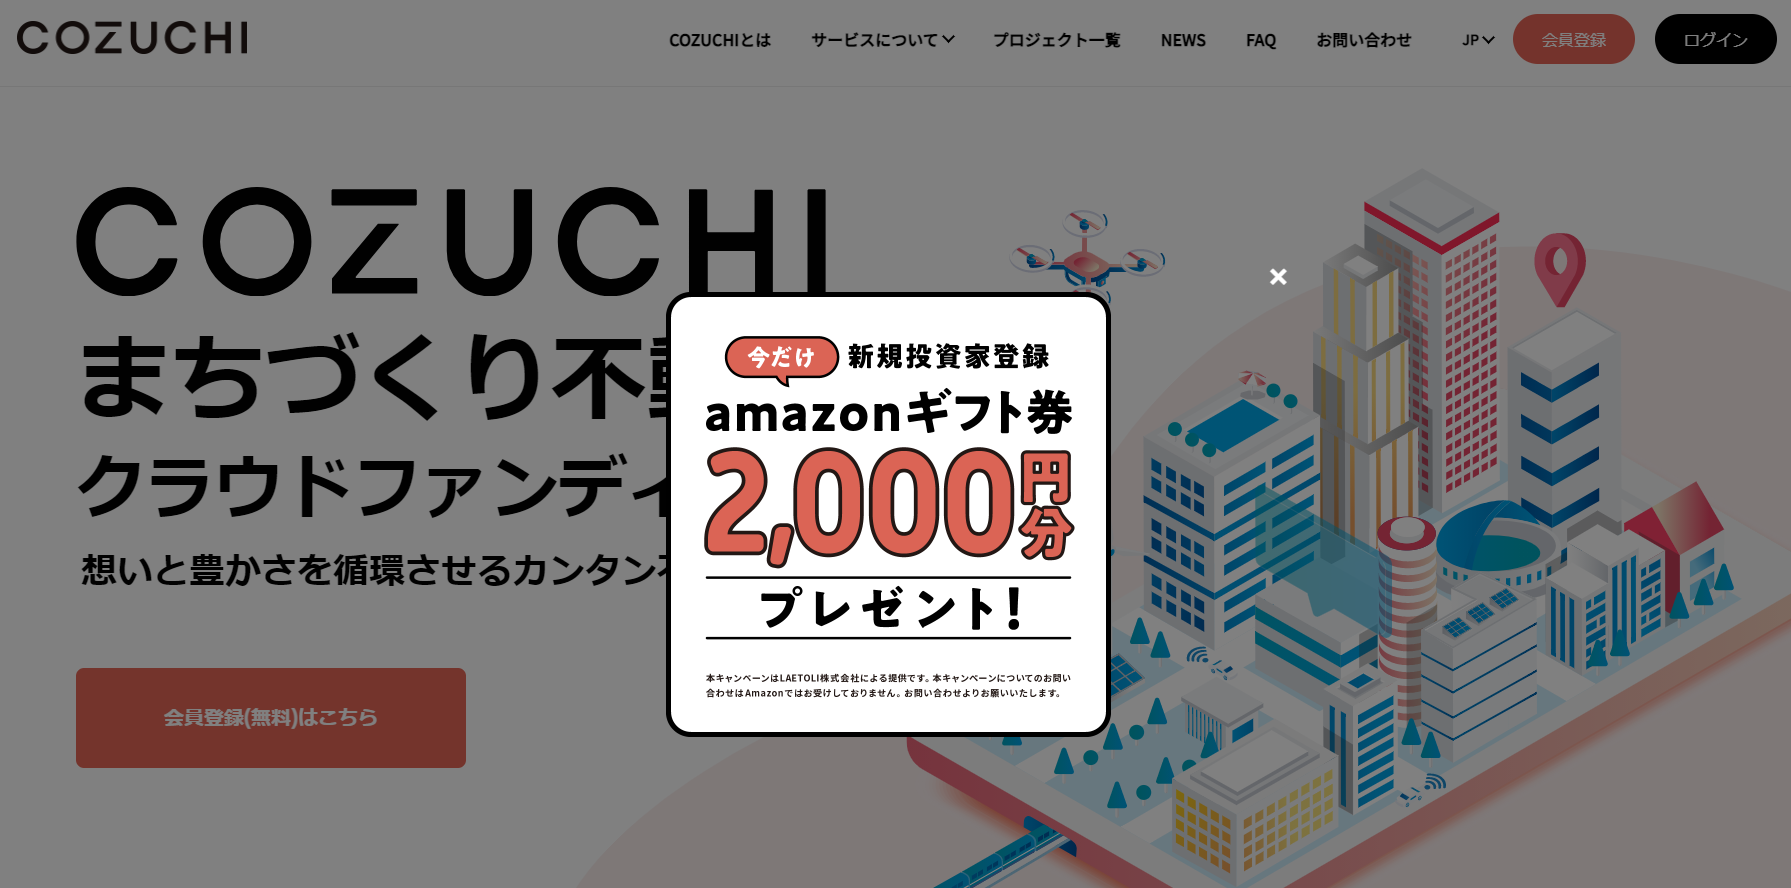 cozuchi210903-1